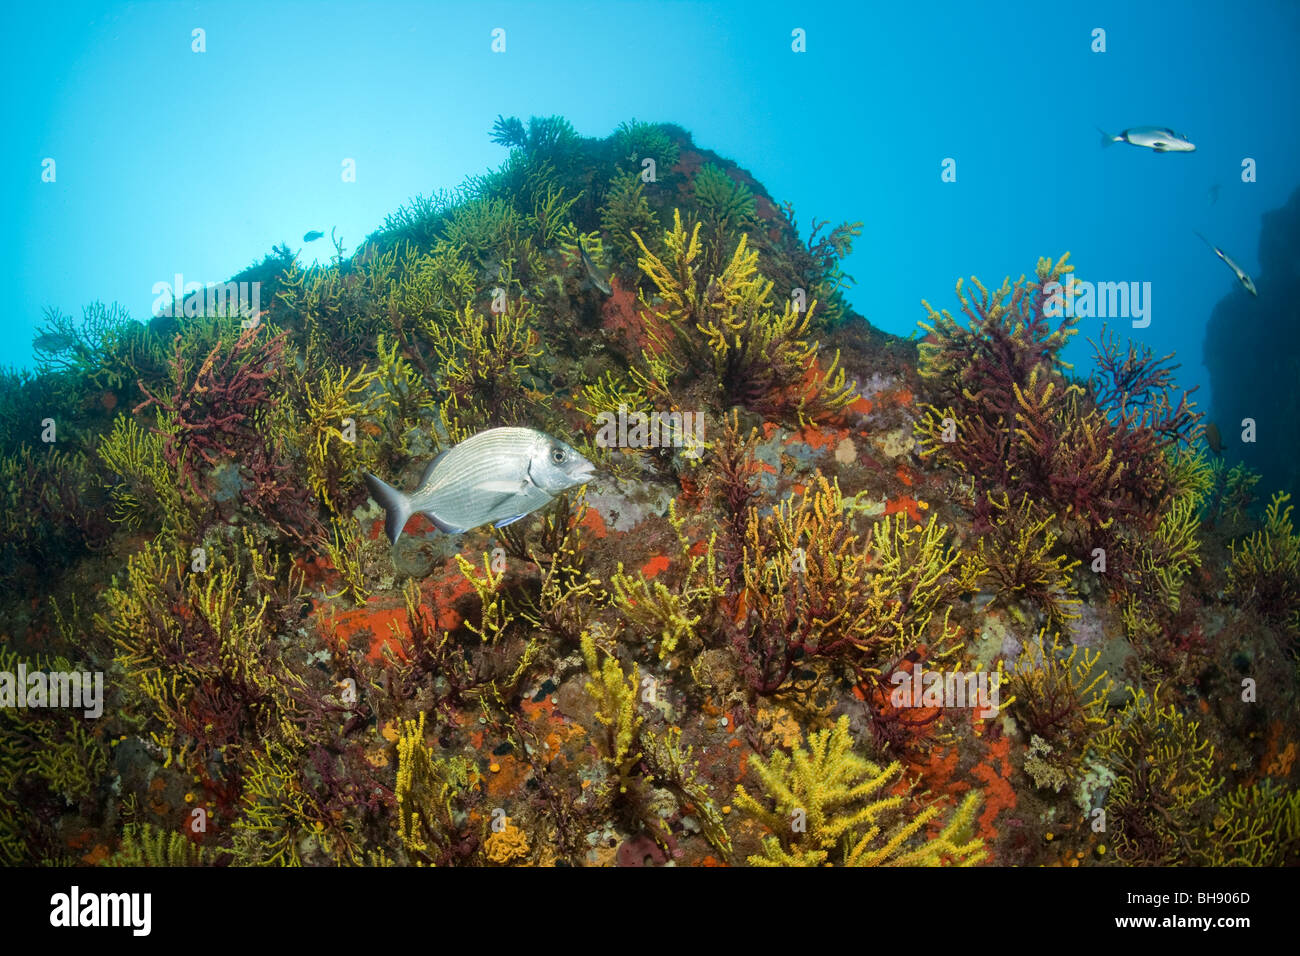 Variabe Gorgonians in Reef, Paramuricea clavata, Tamariu, Costa Brava, Mediterranean Sea, Spain Stock Photo